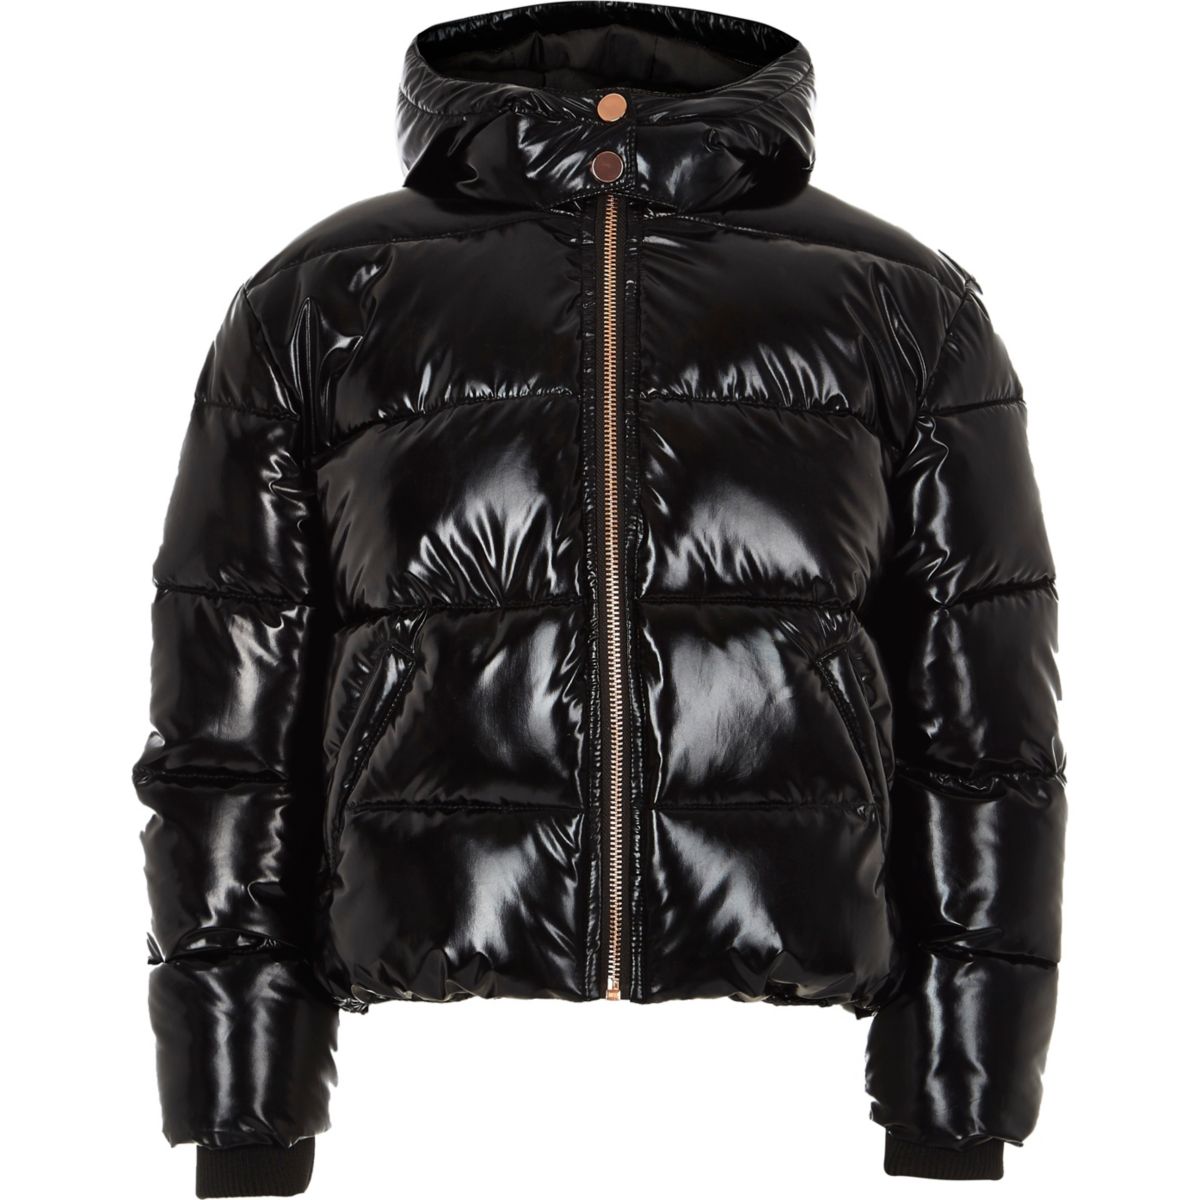 Girls black high shine puffer jacket - Jackets - Coats & Jackets ...